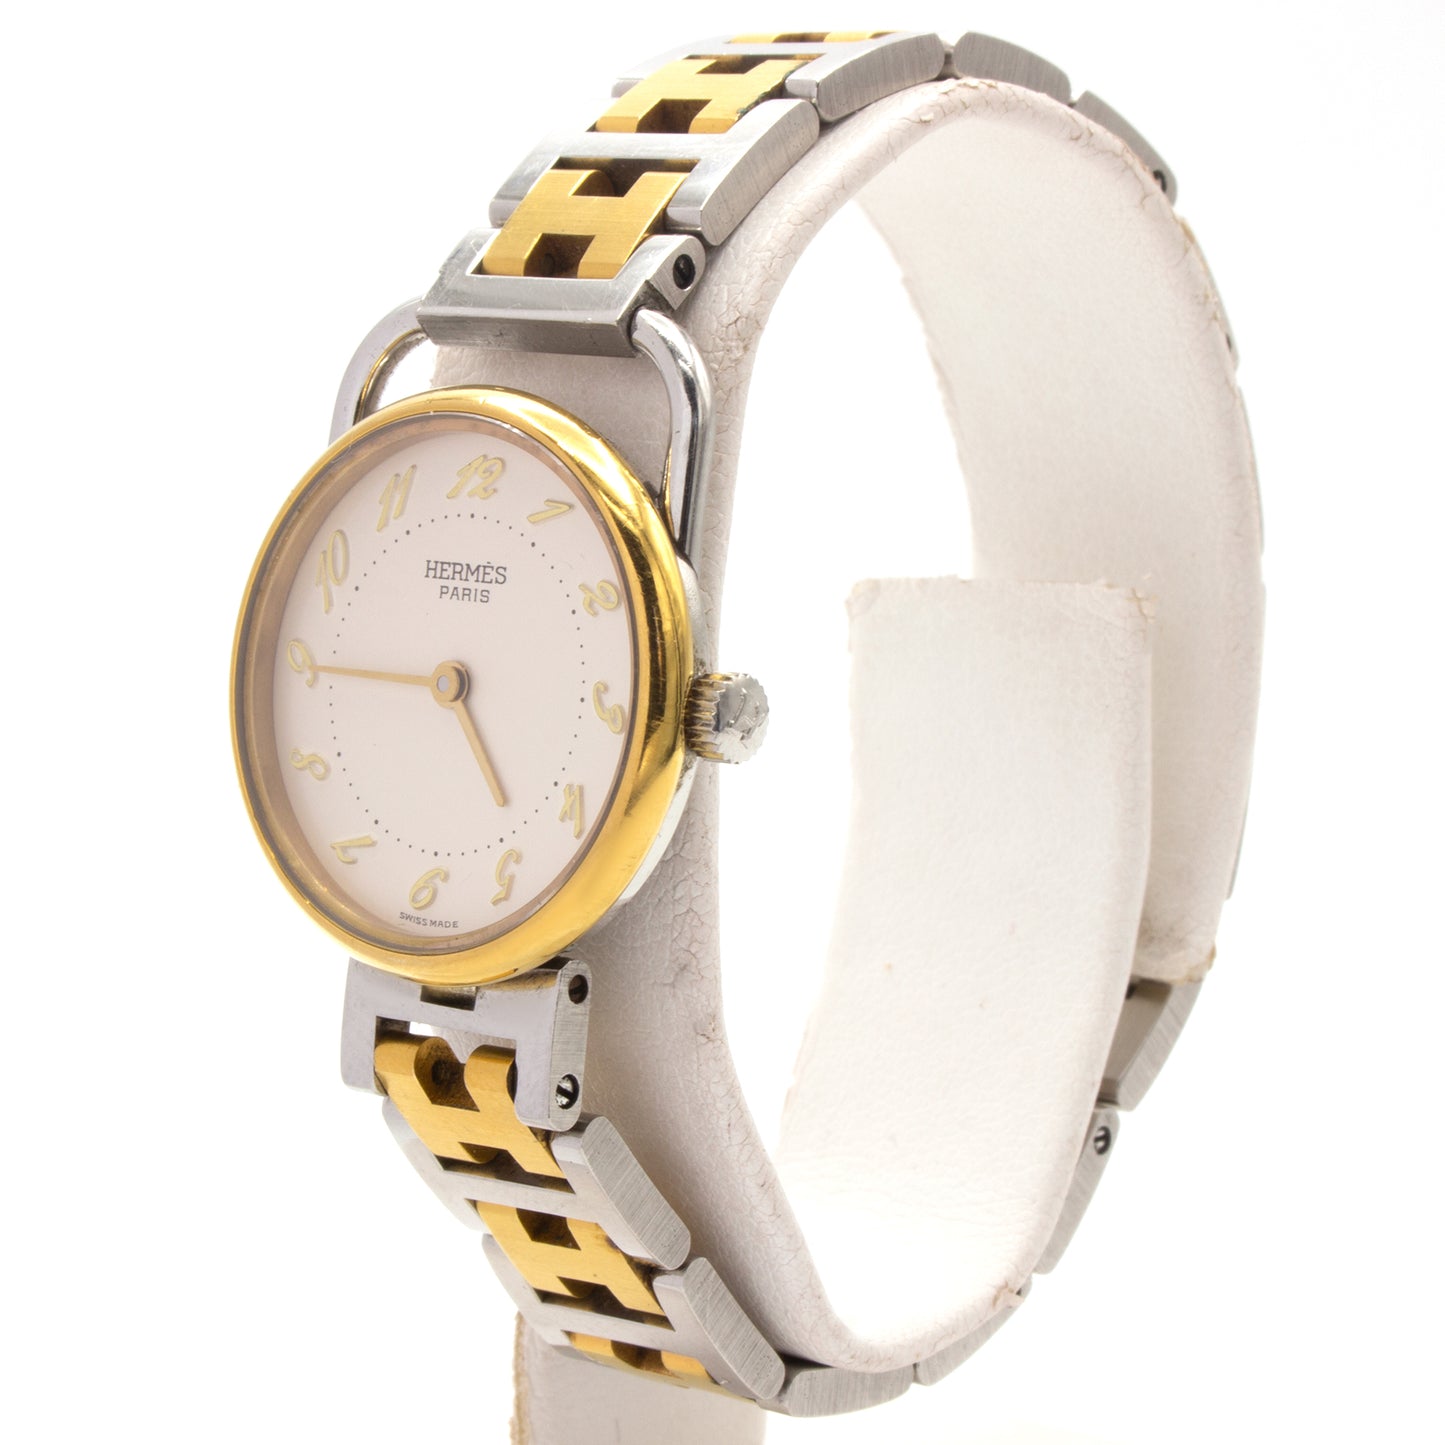 Hermès Arceau 25mm watch